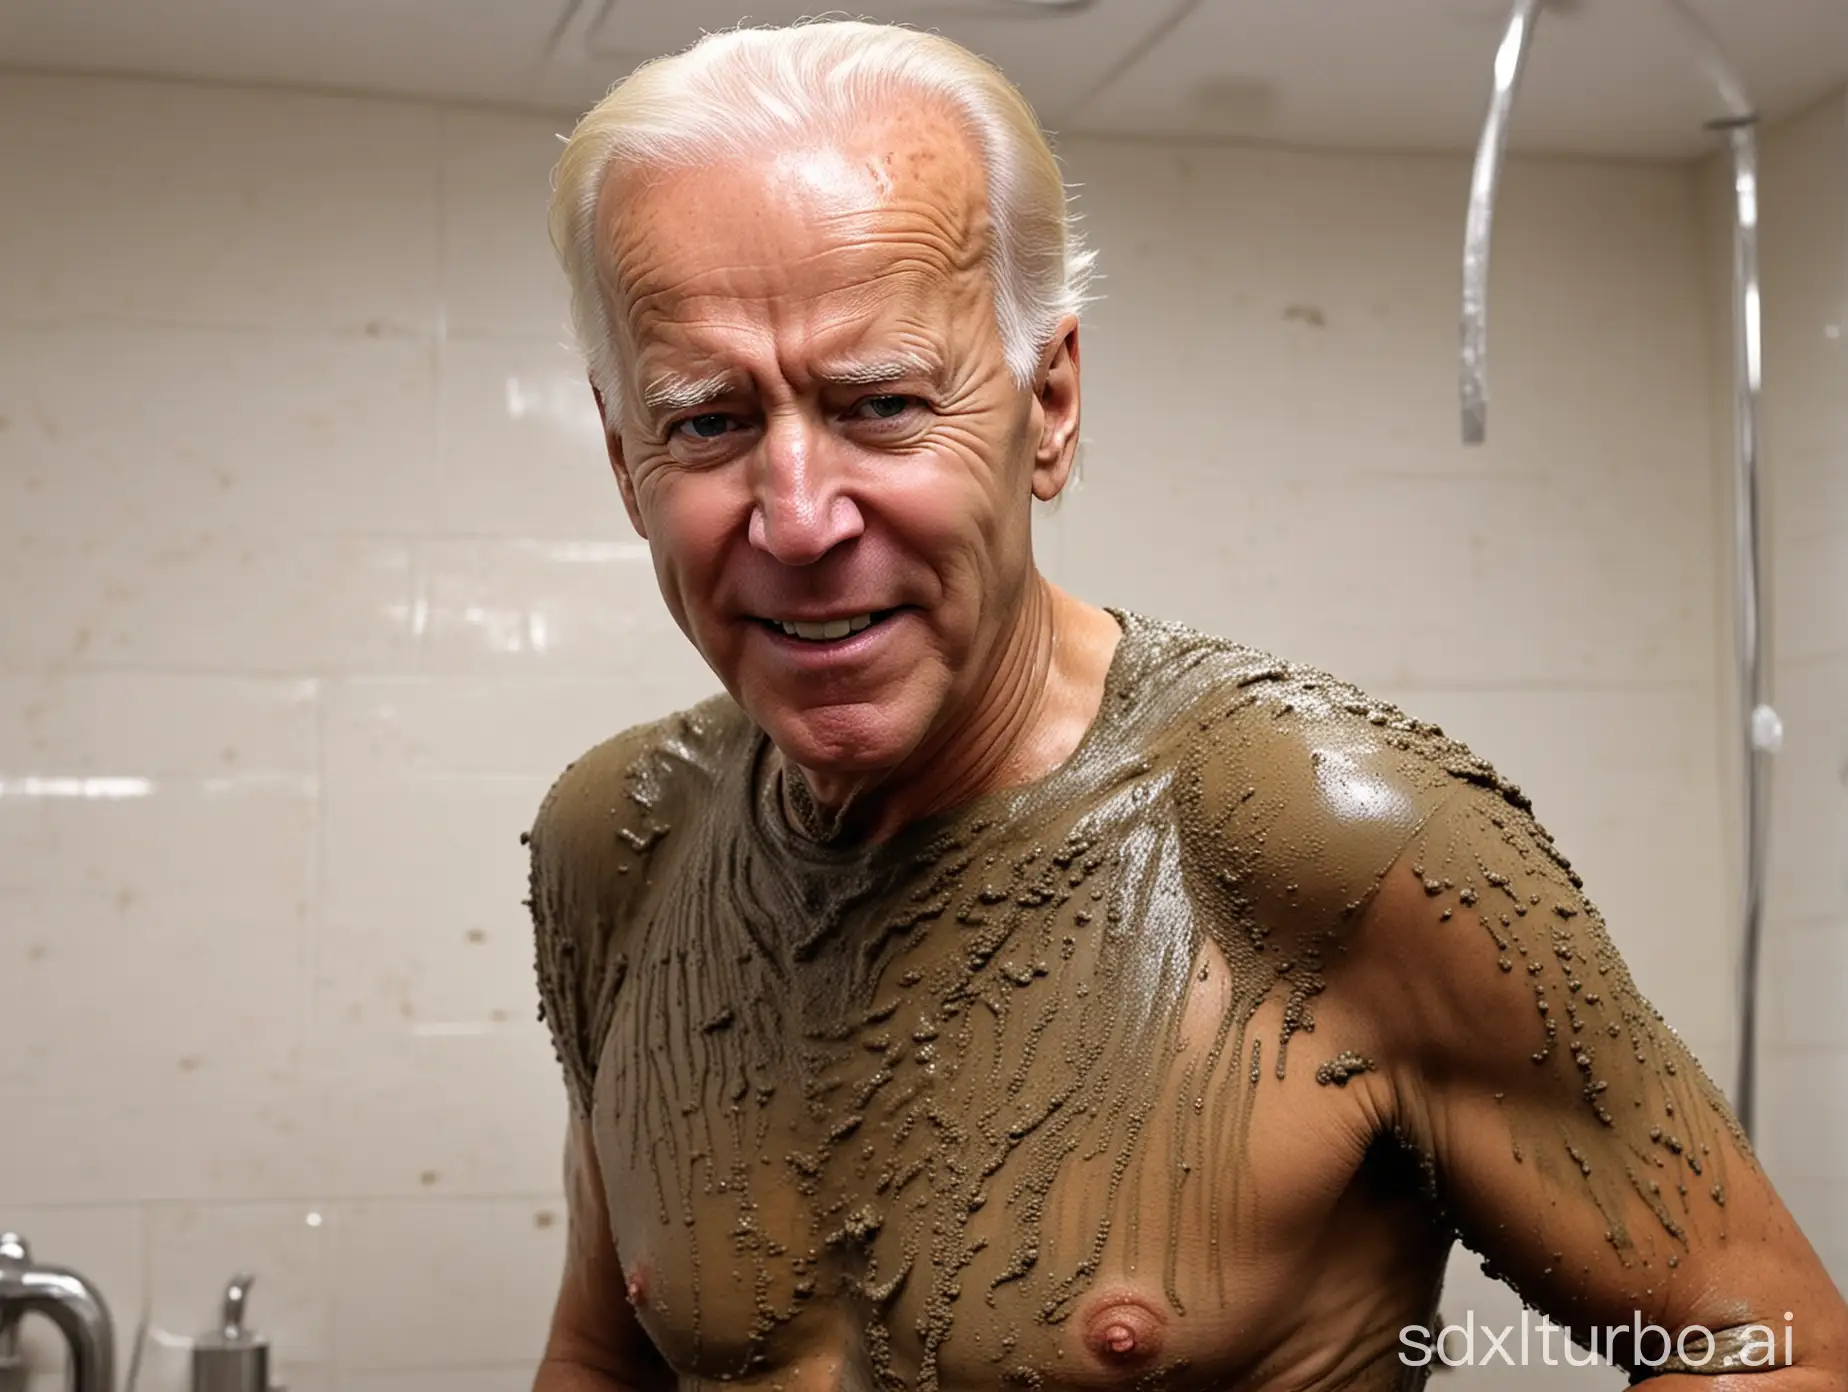 Joe Biden covered in mud in a gas station bathroom